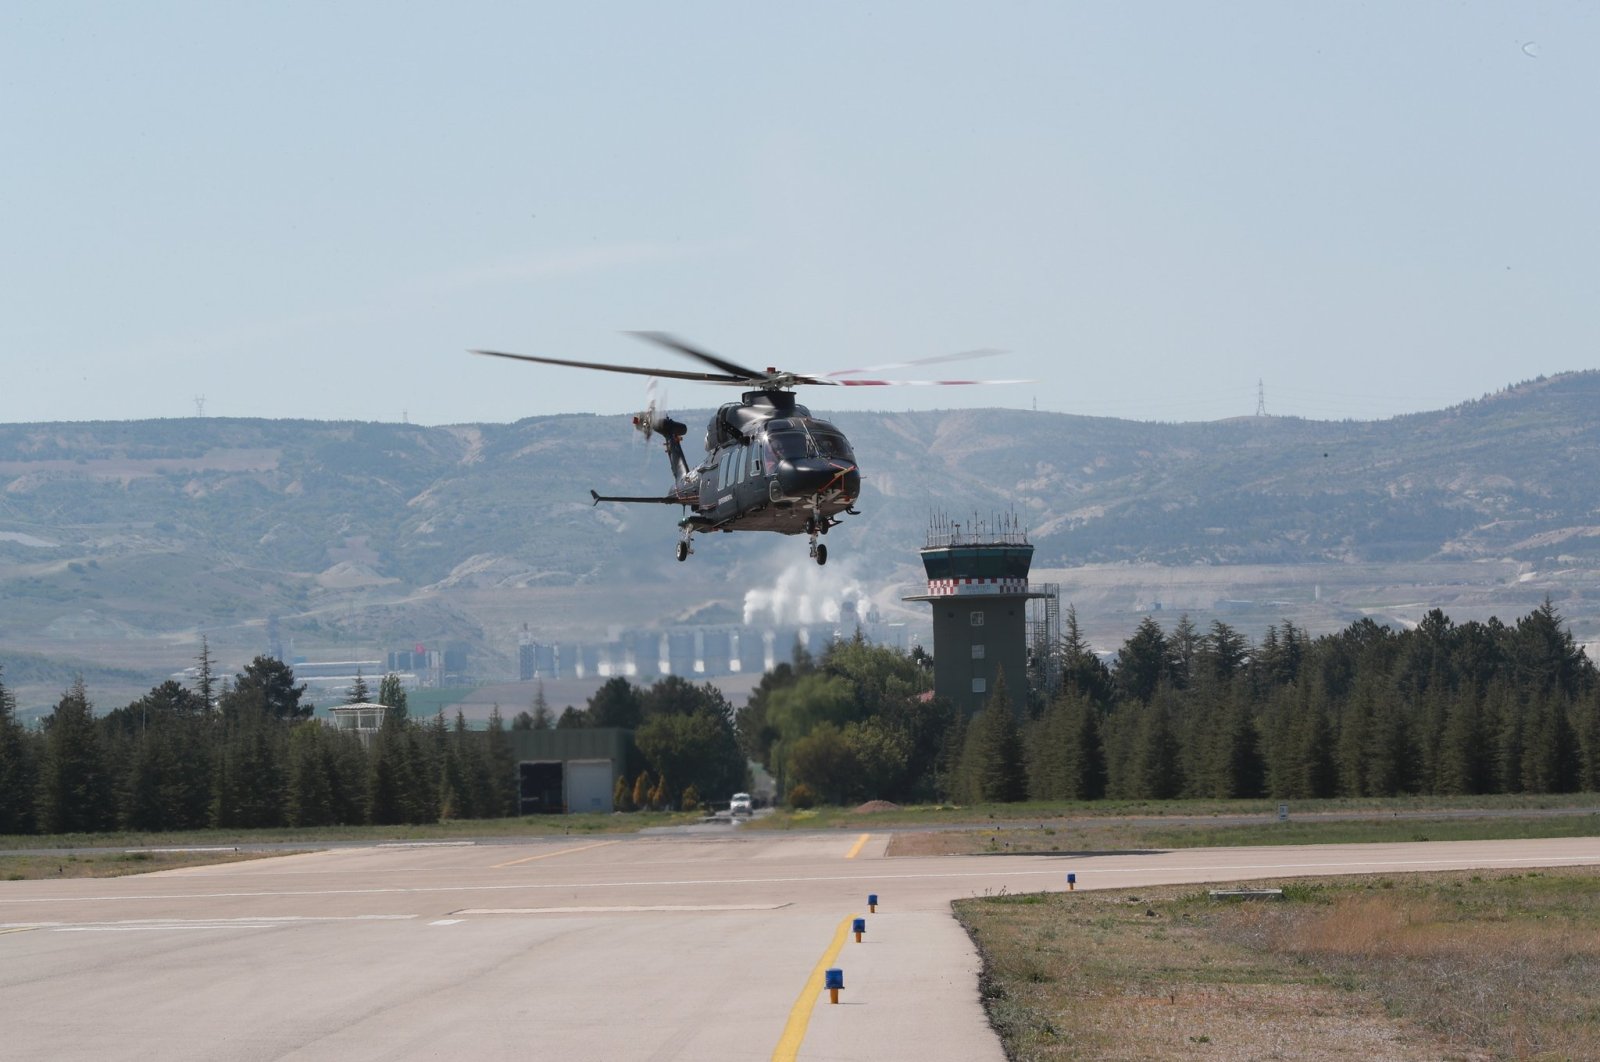 Turki berhasil menguji ke-4 helikopter multiperannya Gökbey